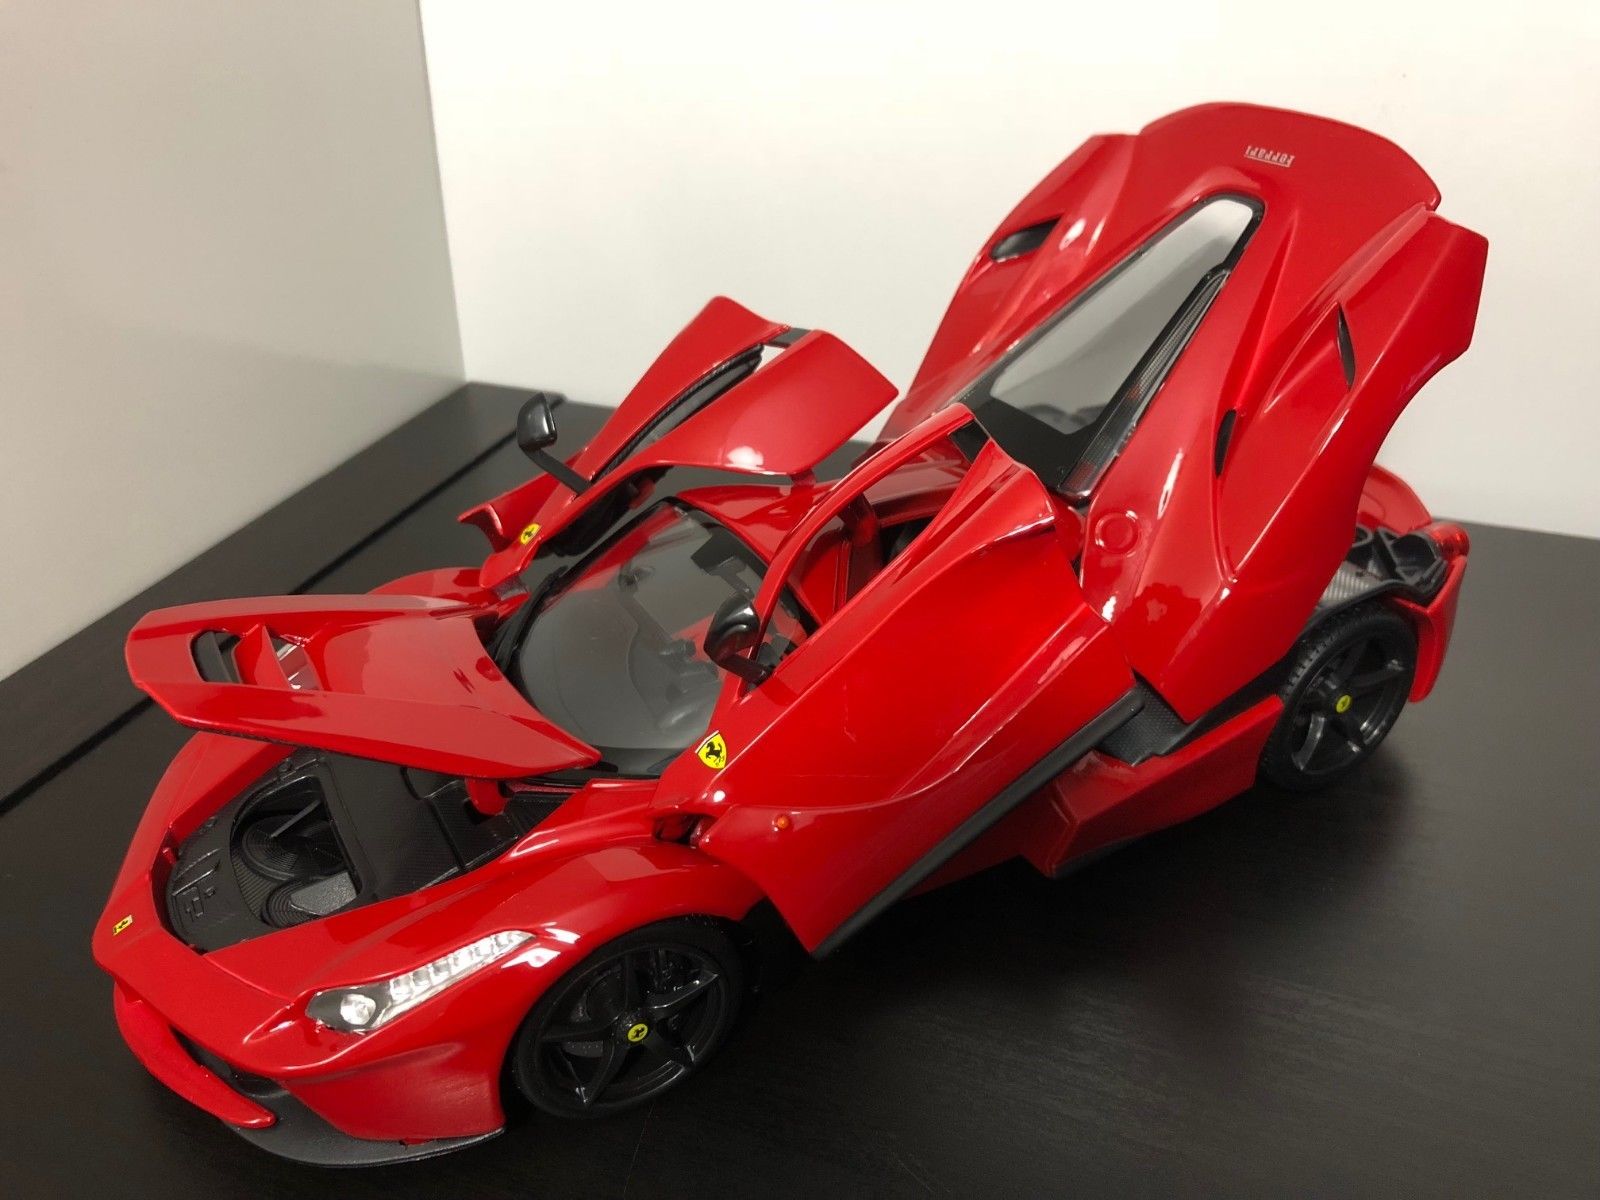 1524663731_297_AwesomeAmazingGreat Maisto Ferrari LaFerrari 118 Scale Model Car 2017 20182018 201920172018